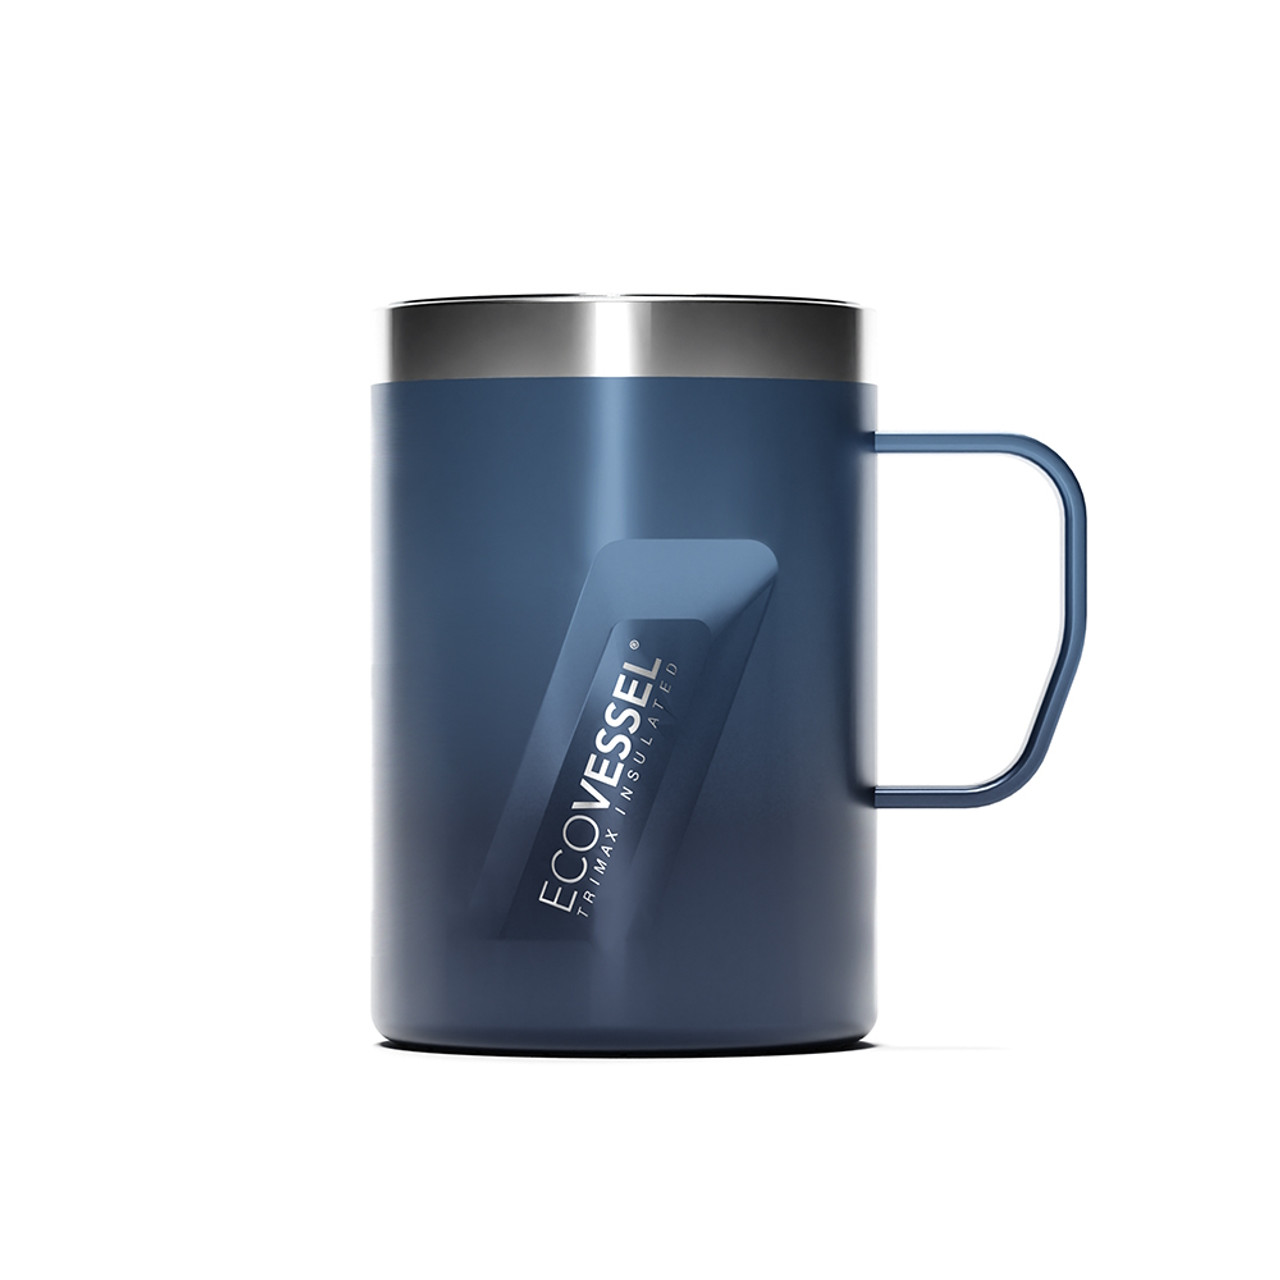 12 oz EcoVessel Insulated Coffee mug, The Transit